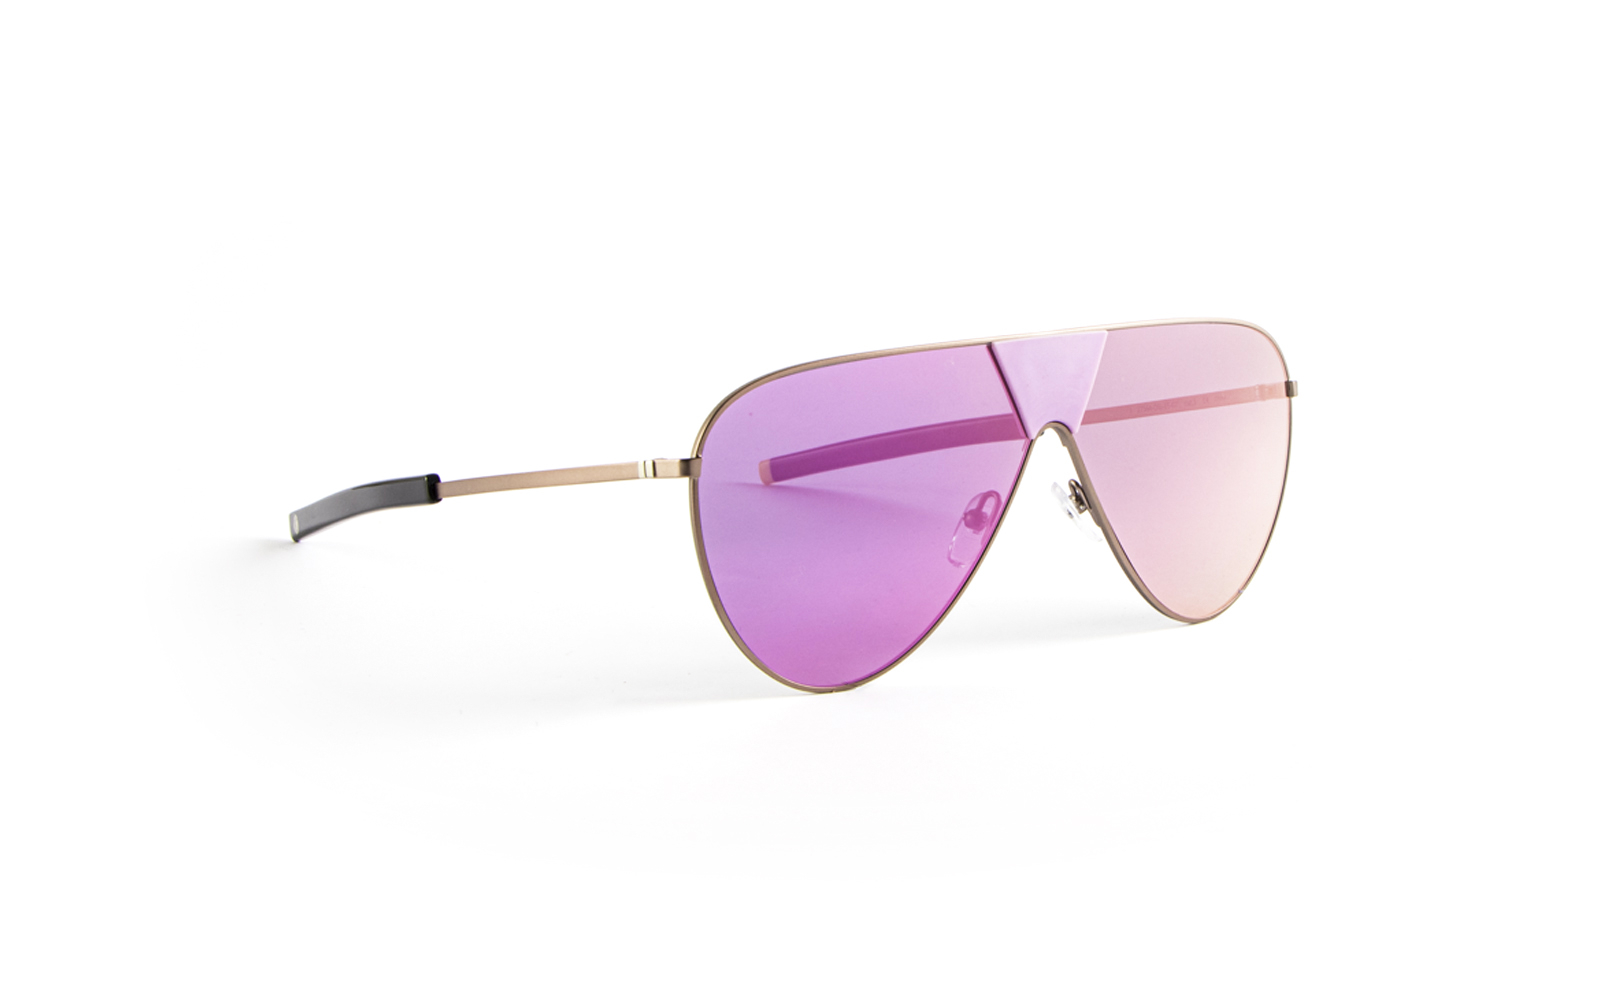 Invicta Men's Objet D Art Shield Sunglasses, Pink (27564-OBJ-05-07)